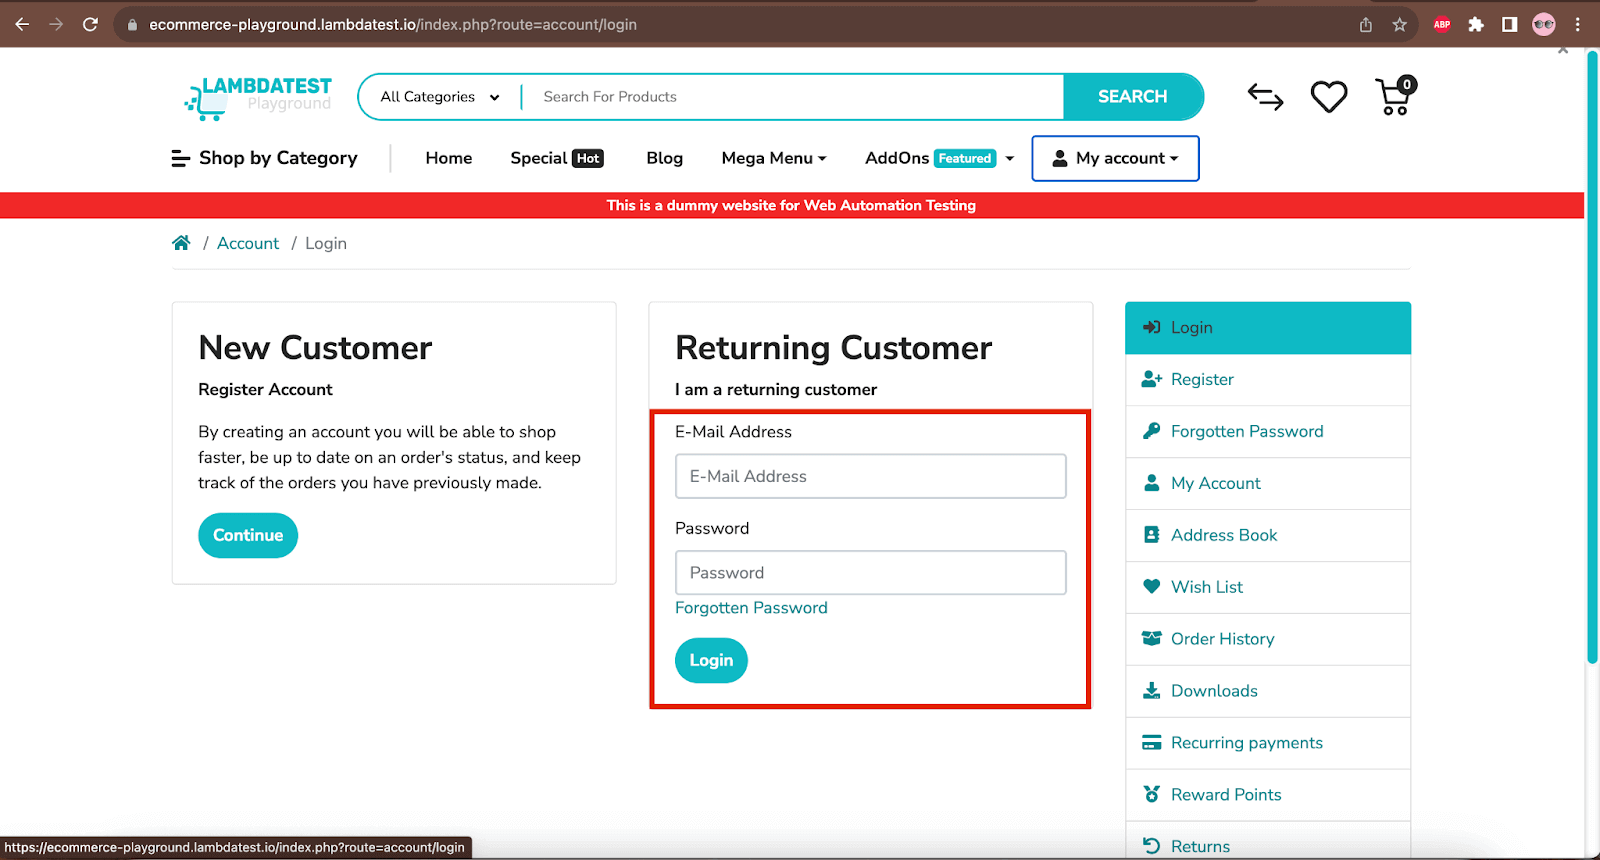 The login screen of LambdaTest’s eCommerce Website